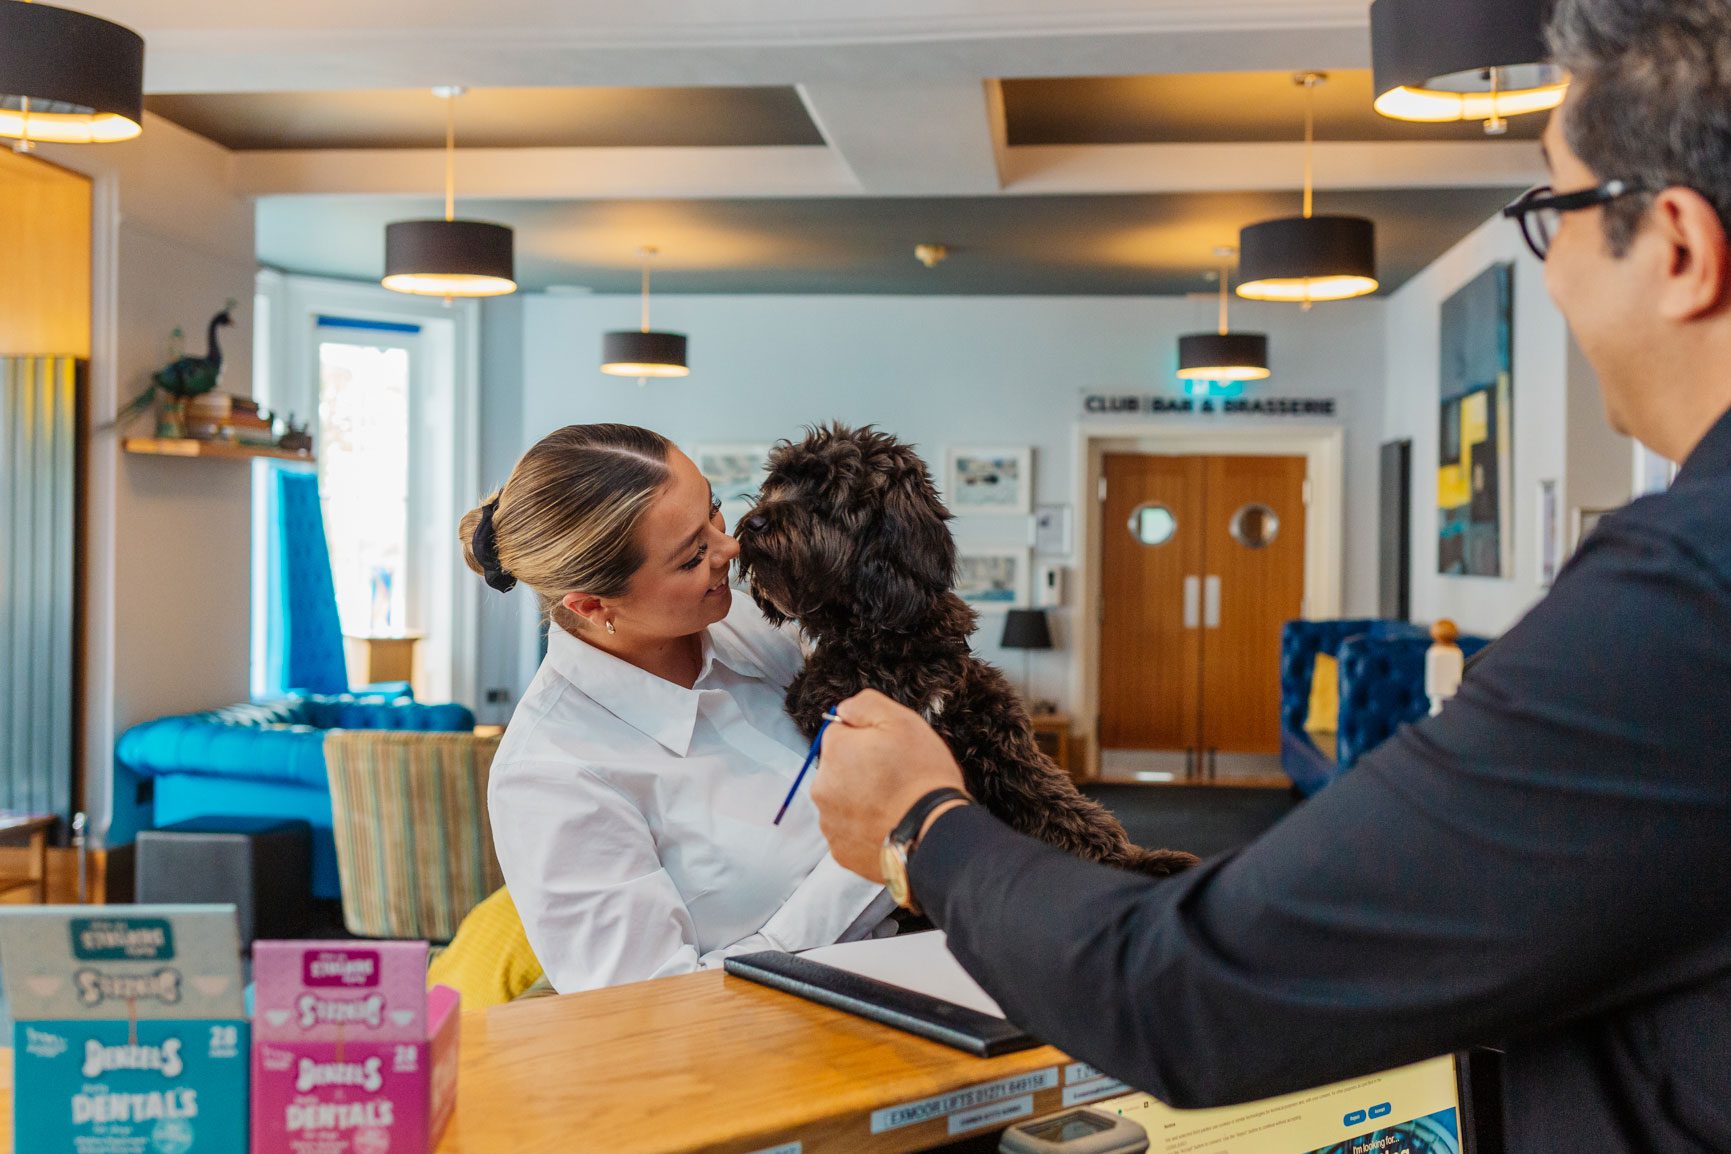 Hotel staff at a dog-friendly hotel in North Devon welcome a dog guest